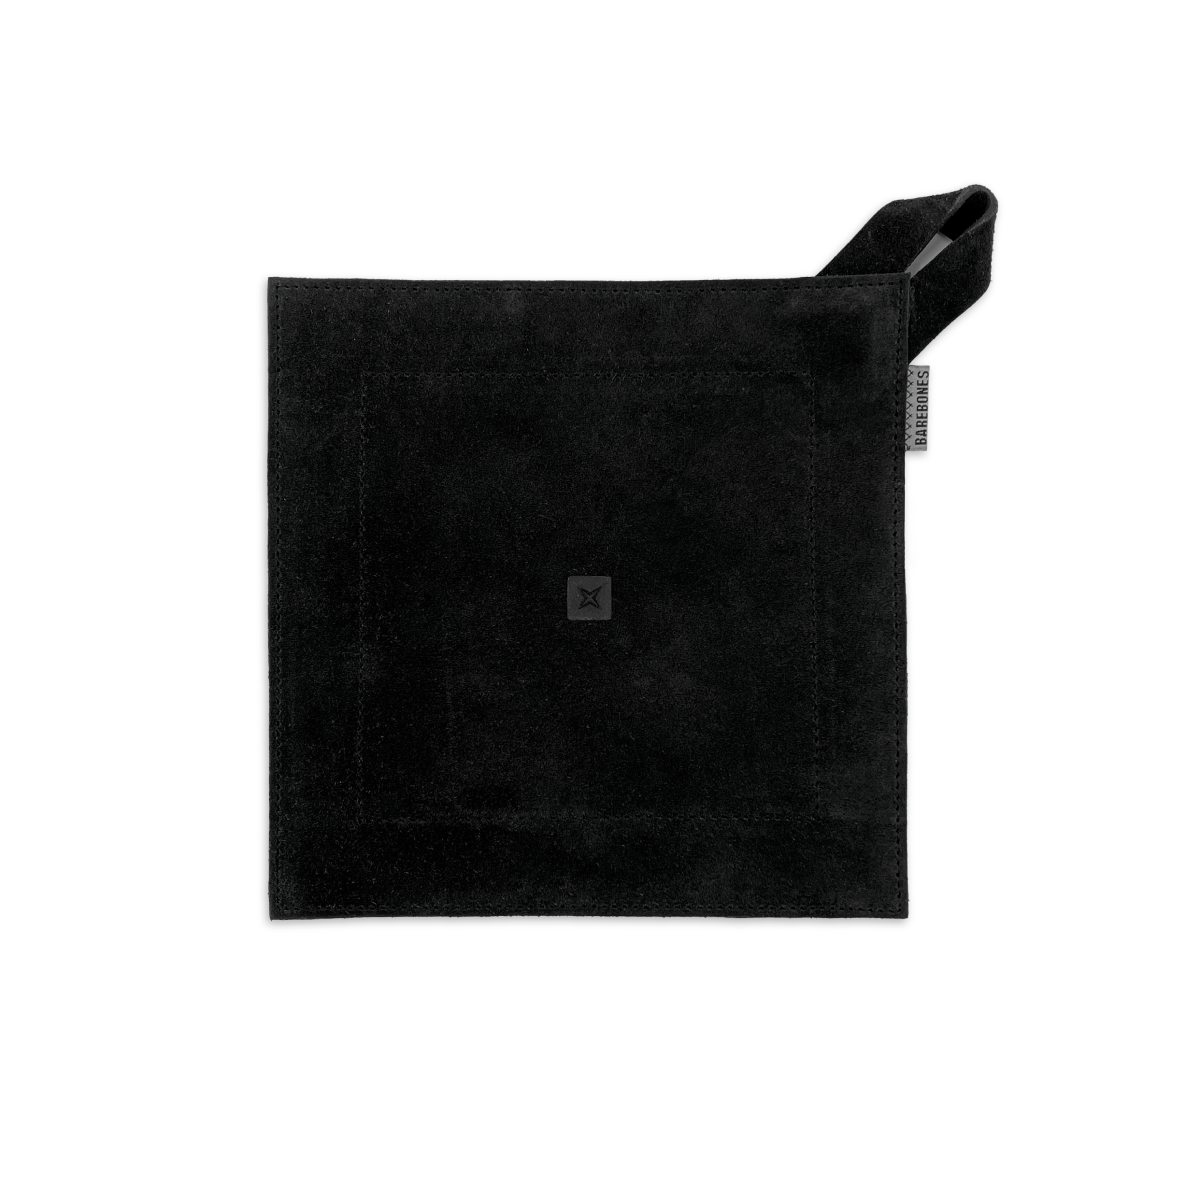 Zwarte leather hot pad